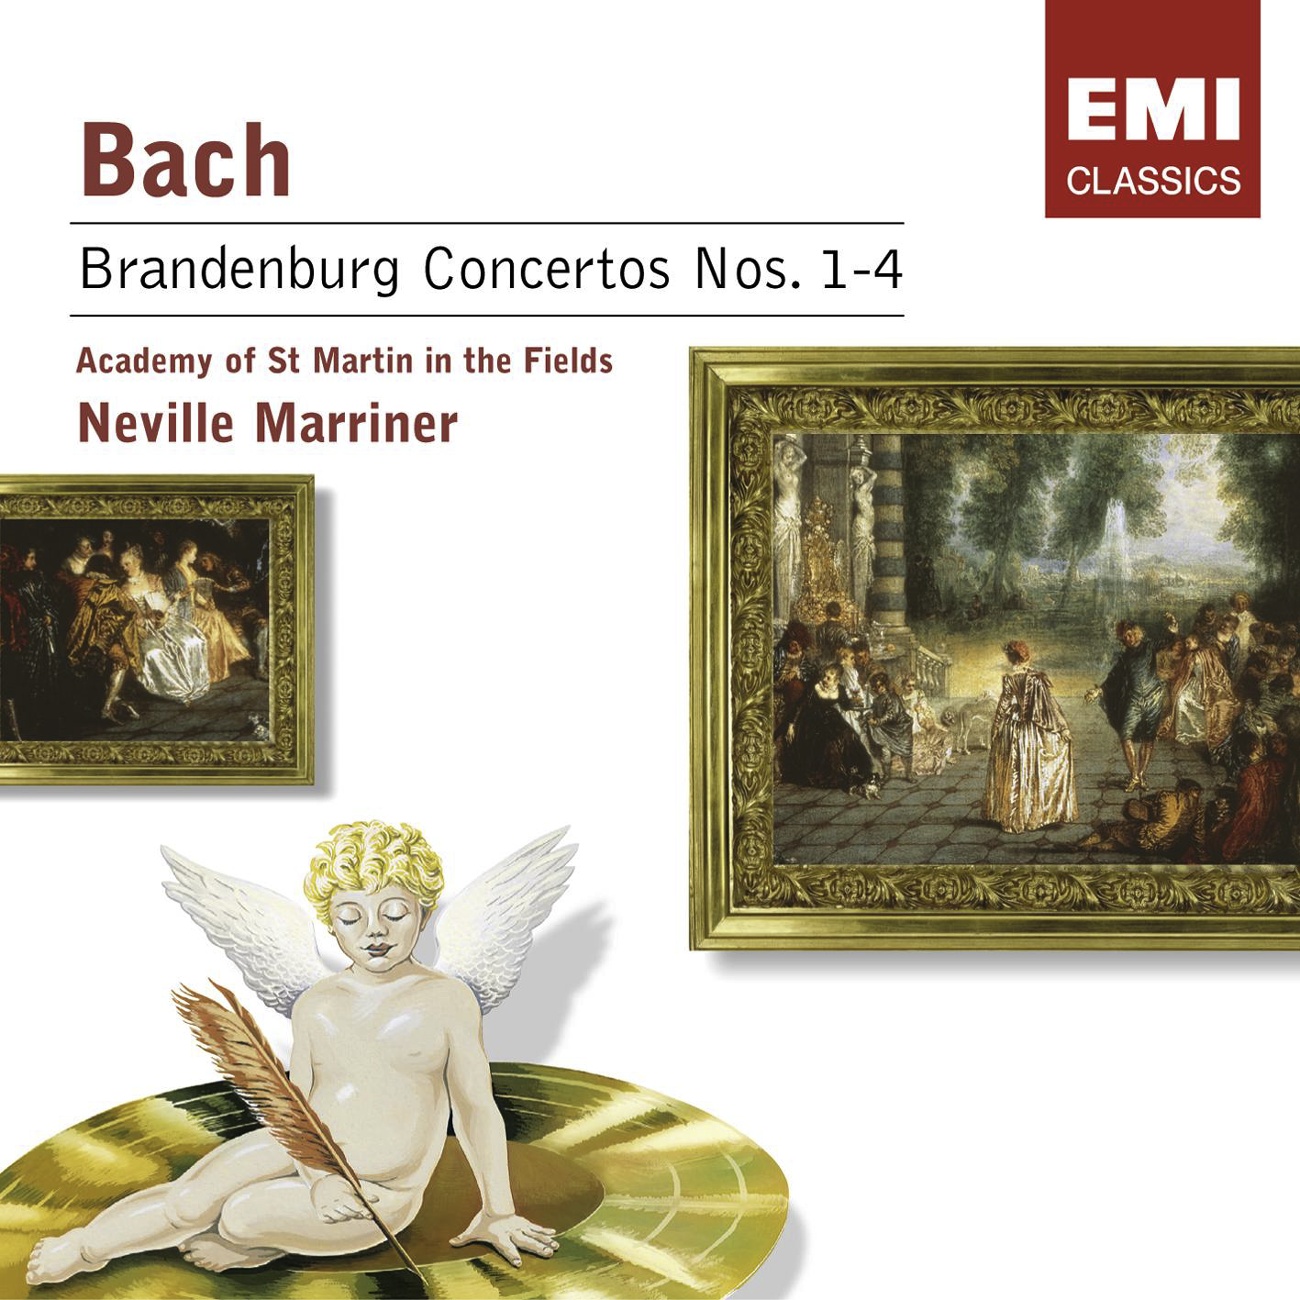 Brandenburg Concerto No. 3 in G, BWV 1048: III. Allegro